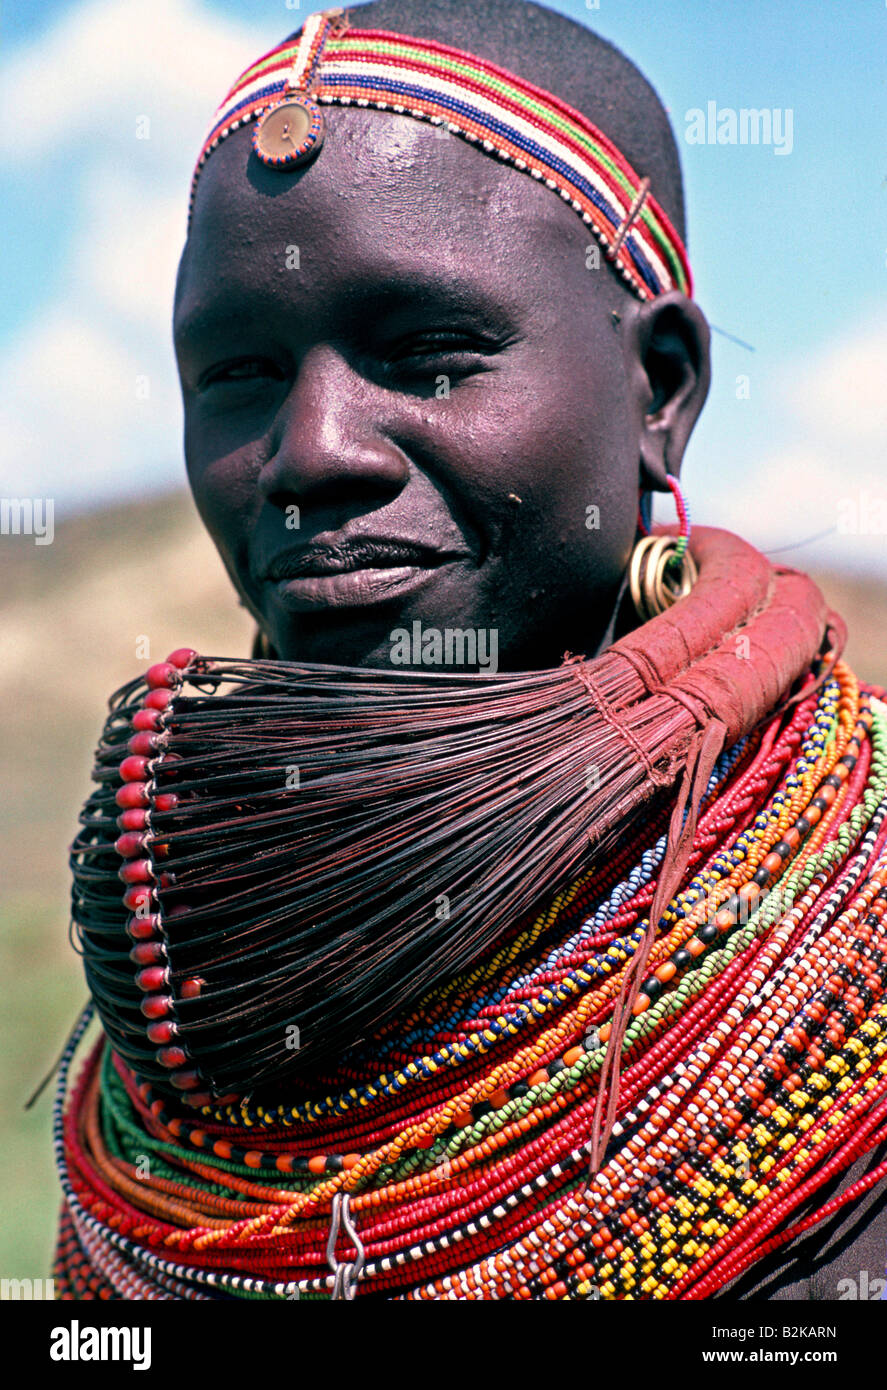 sambouru community woman with mutiple beaded necklaces Stock Photo